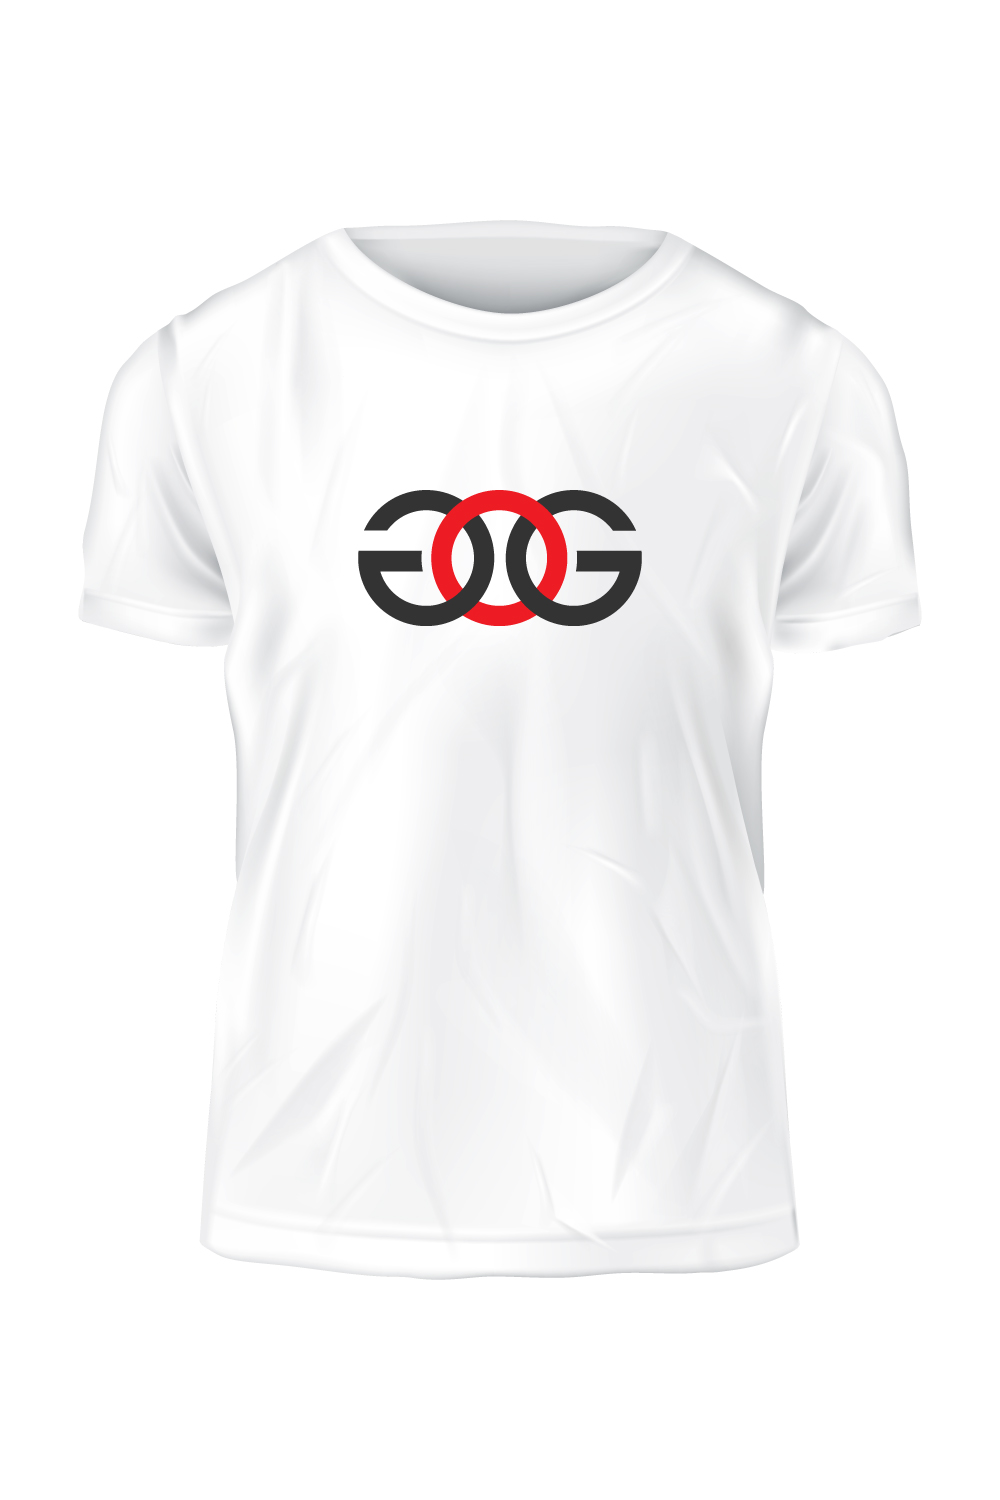 GOG logo design and T-shirt pinterest preview image.